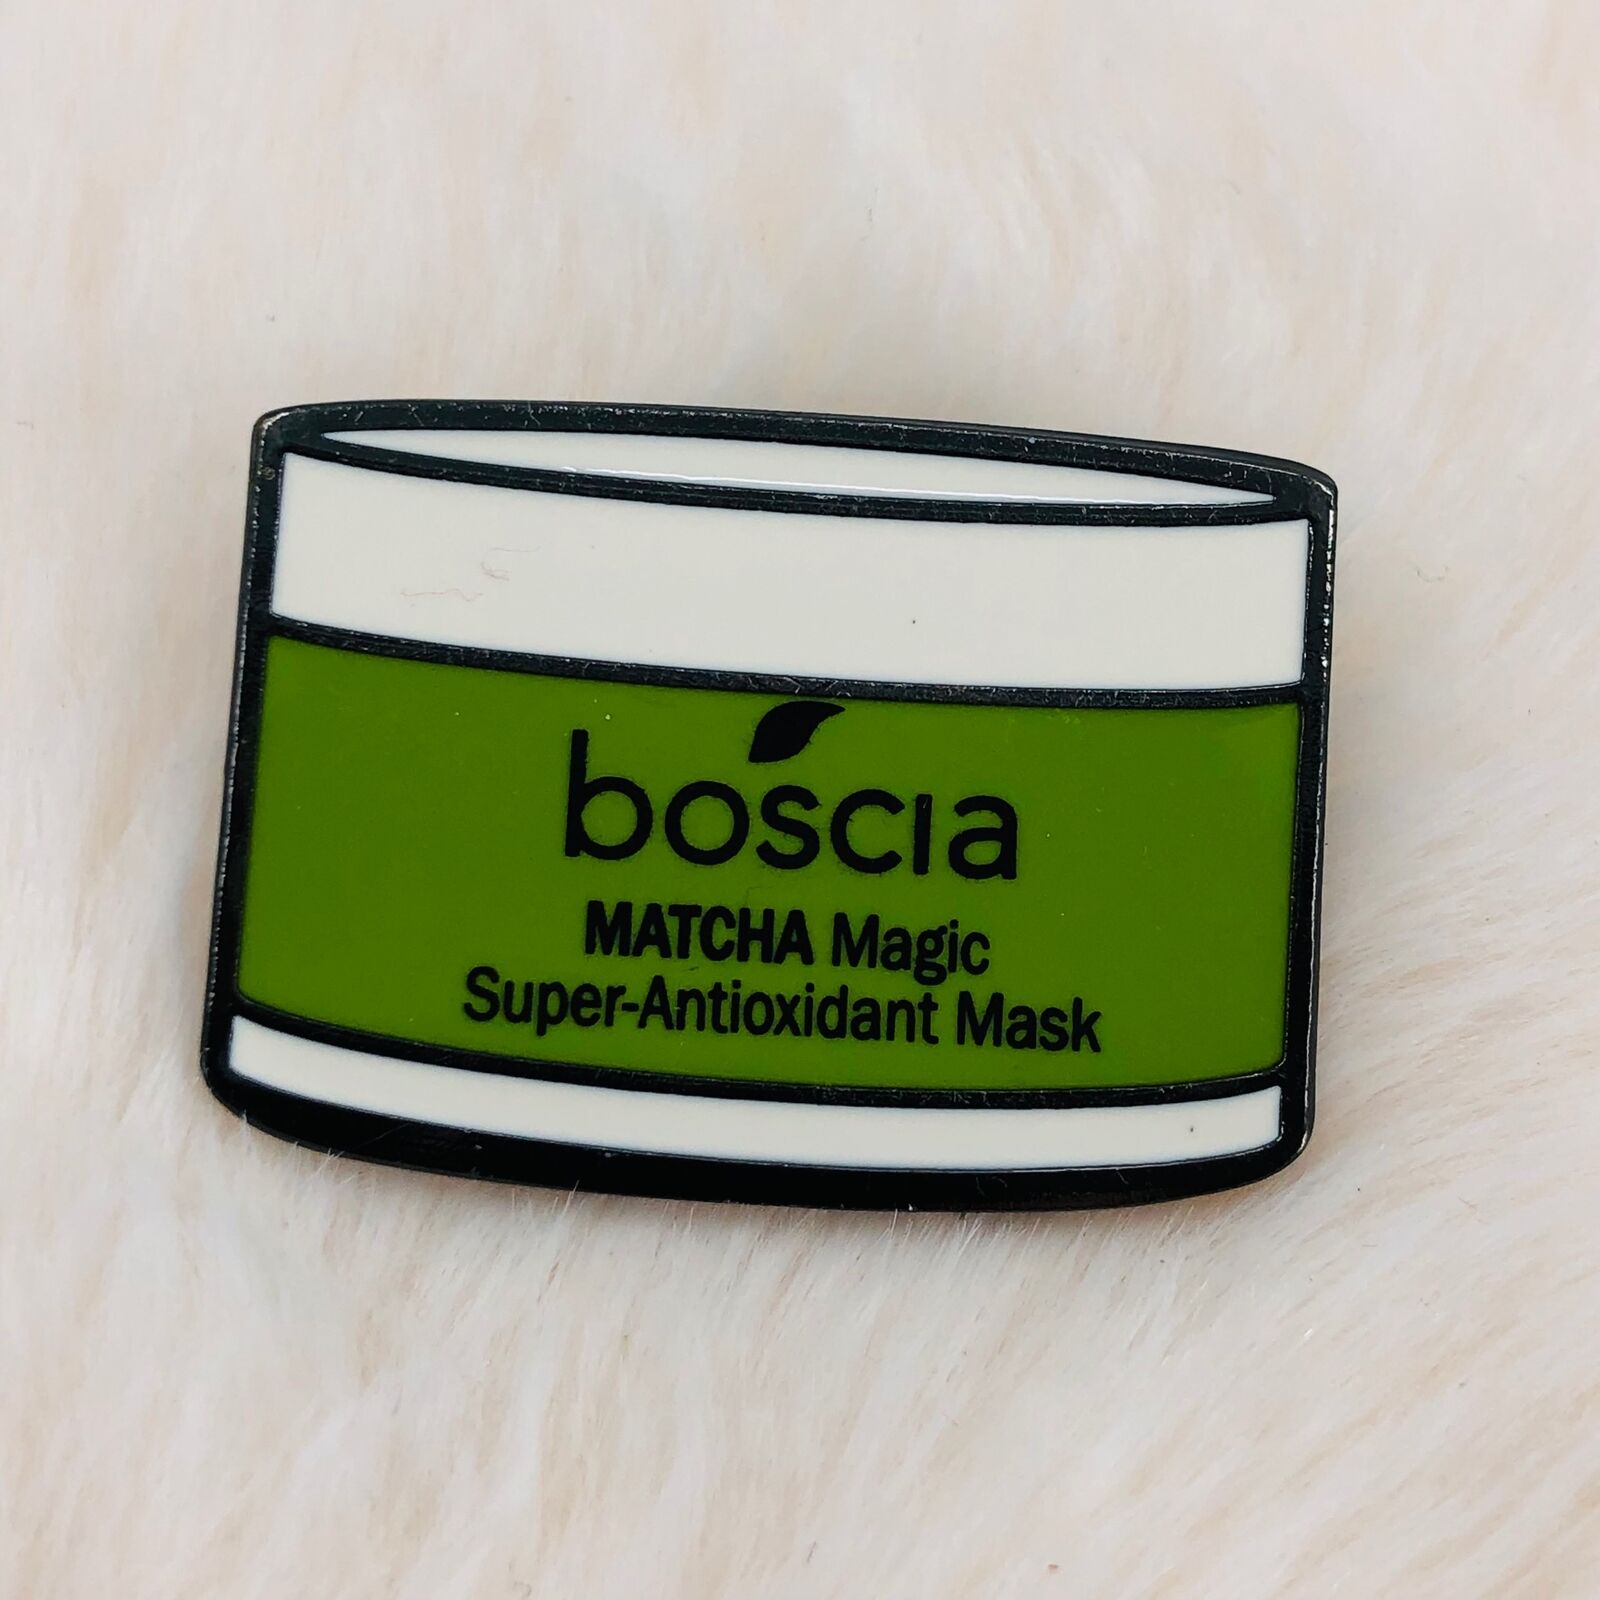 Boscia Skincare Products Advertising Lapel Pin - Matcha Magic Antioxidant Mask